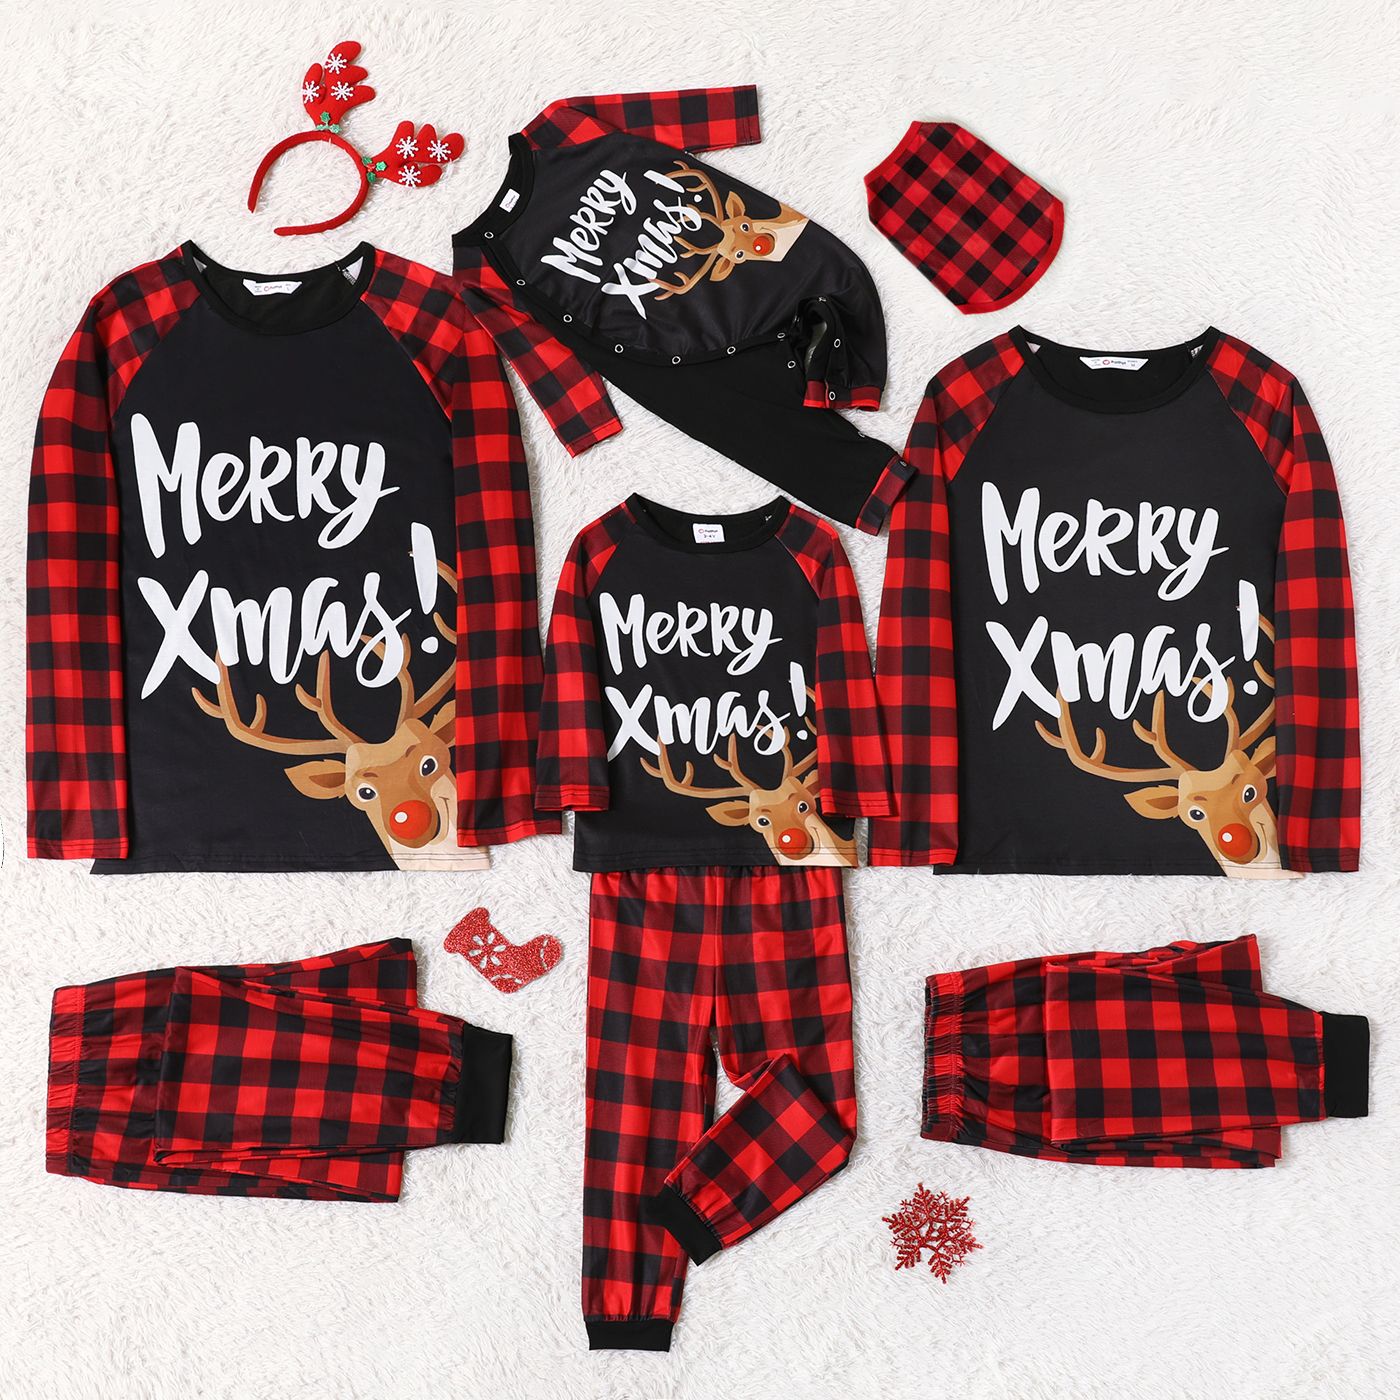 Mosaic Family Matching ' Merry Xmas ' Reindeer Print Plaid Christmas Pajamas Sets(Flame Resistant)